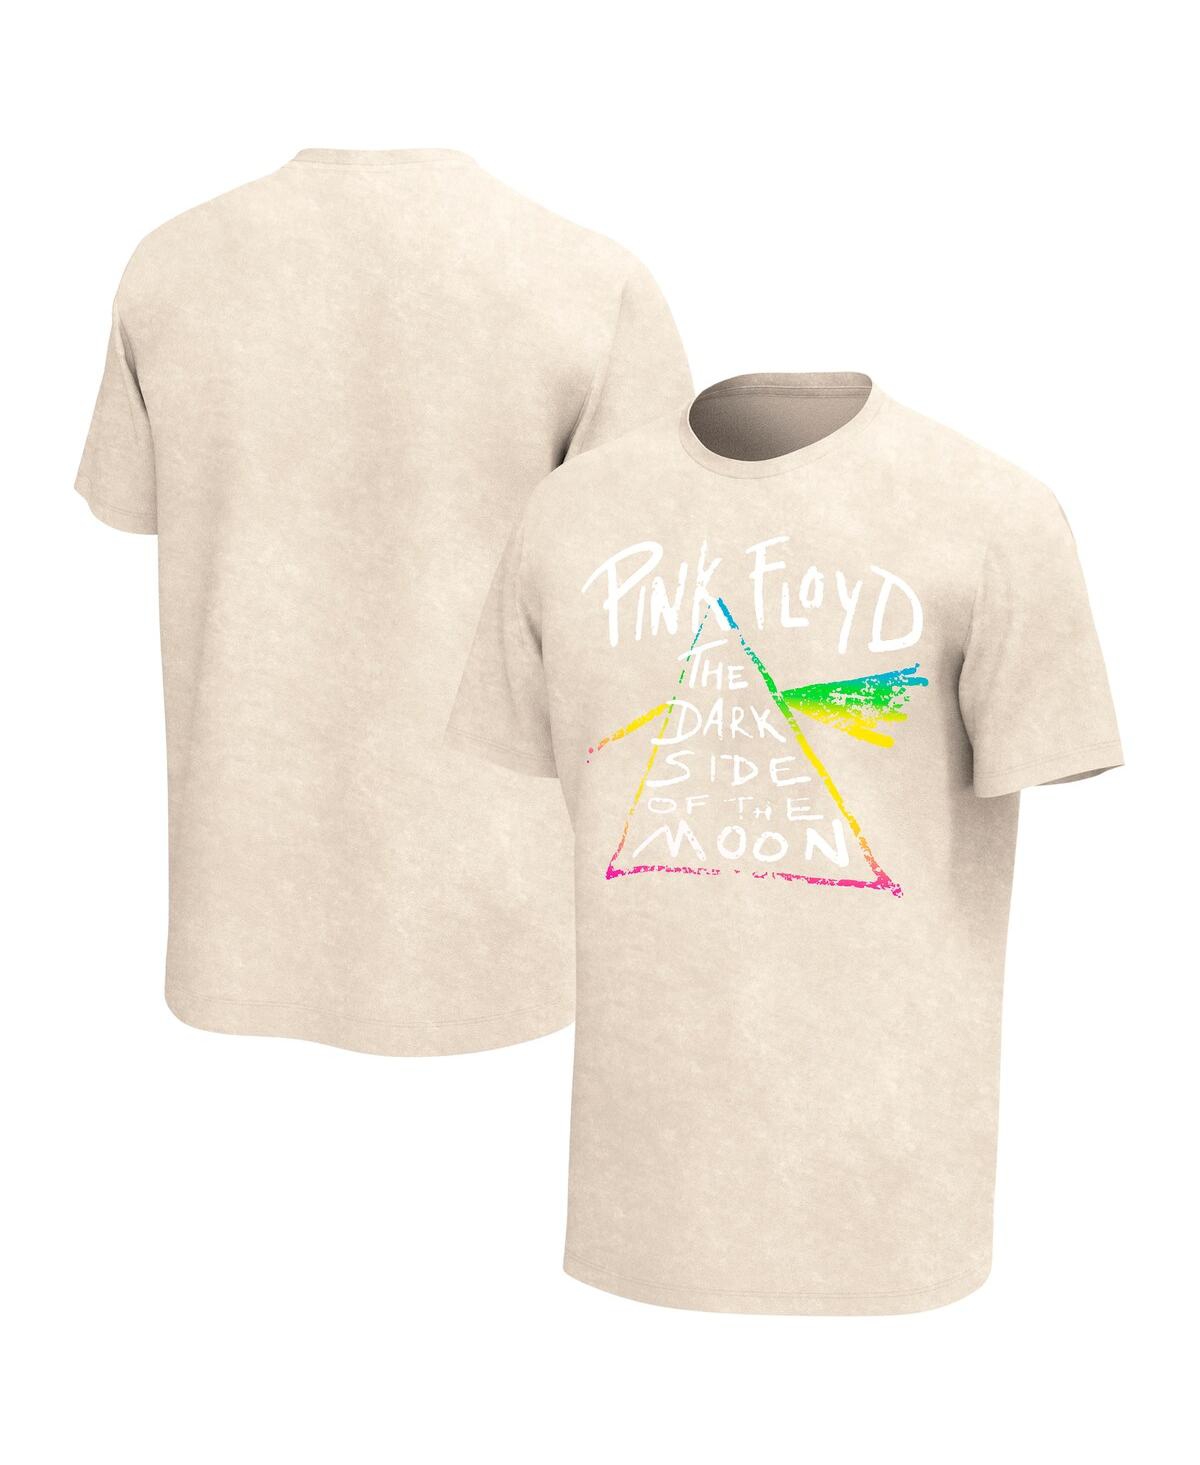 Philcos Men's Tan Pink Floyd Bleach Washed Graphic T-shirt